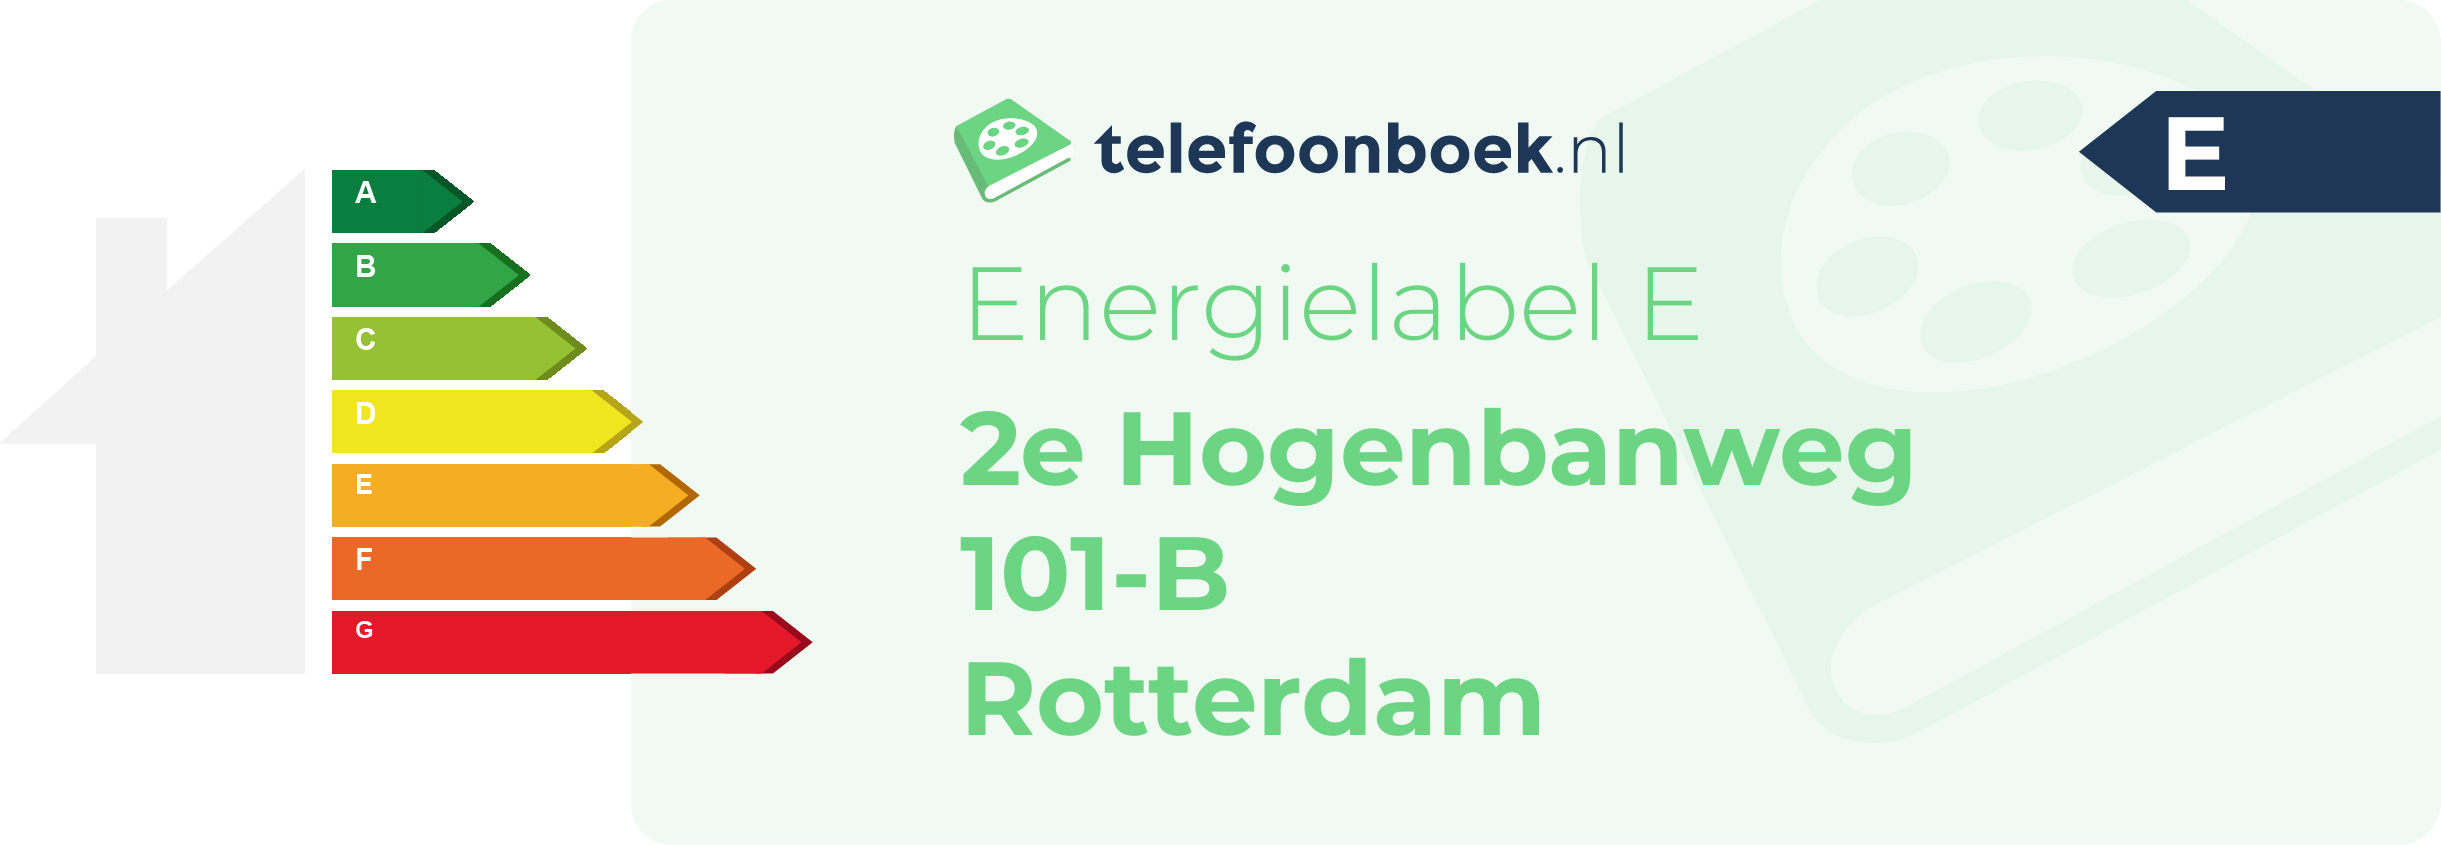 Energielabel 2e Hogenbanweg 101-B Rotterdam